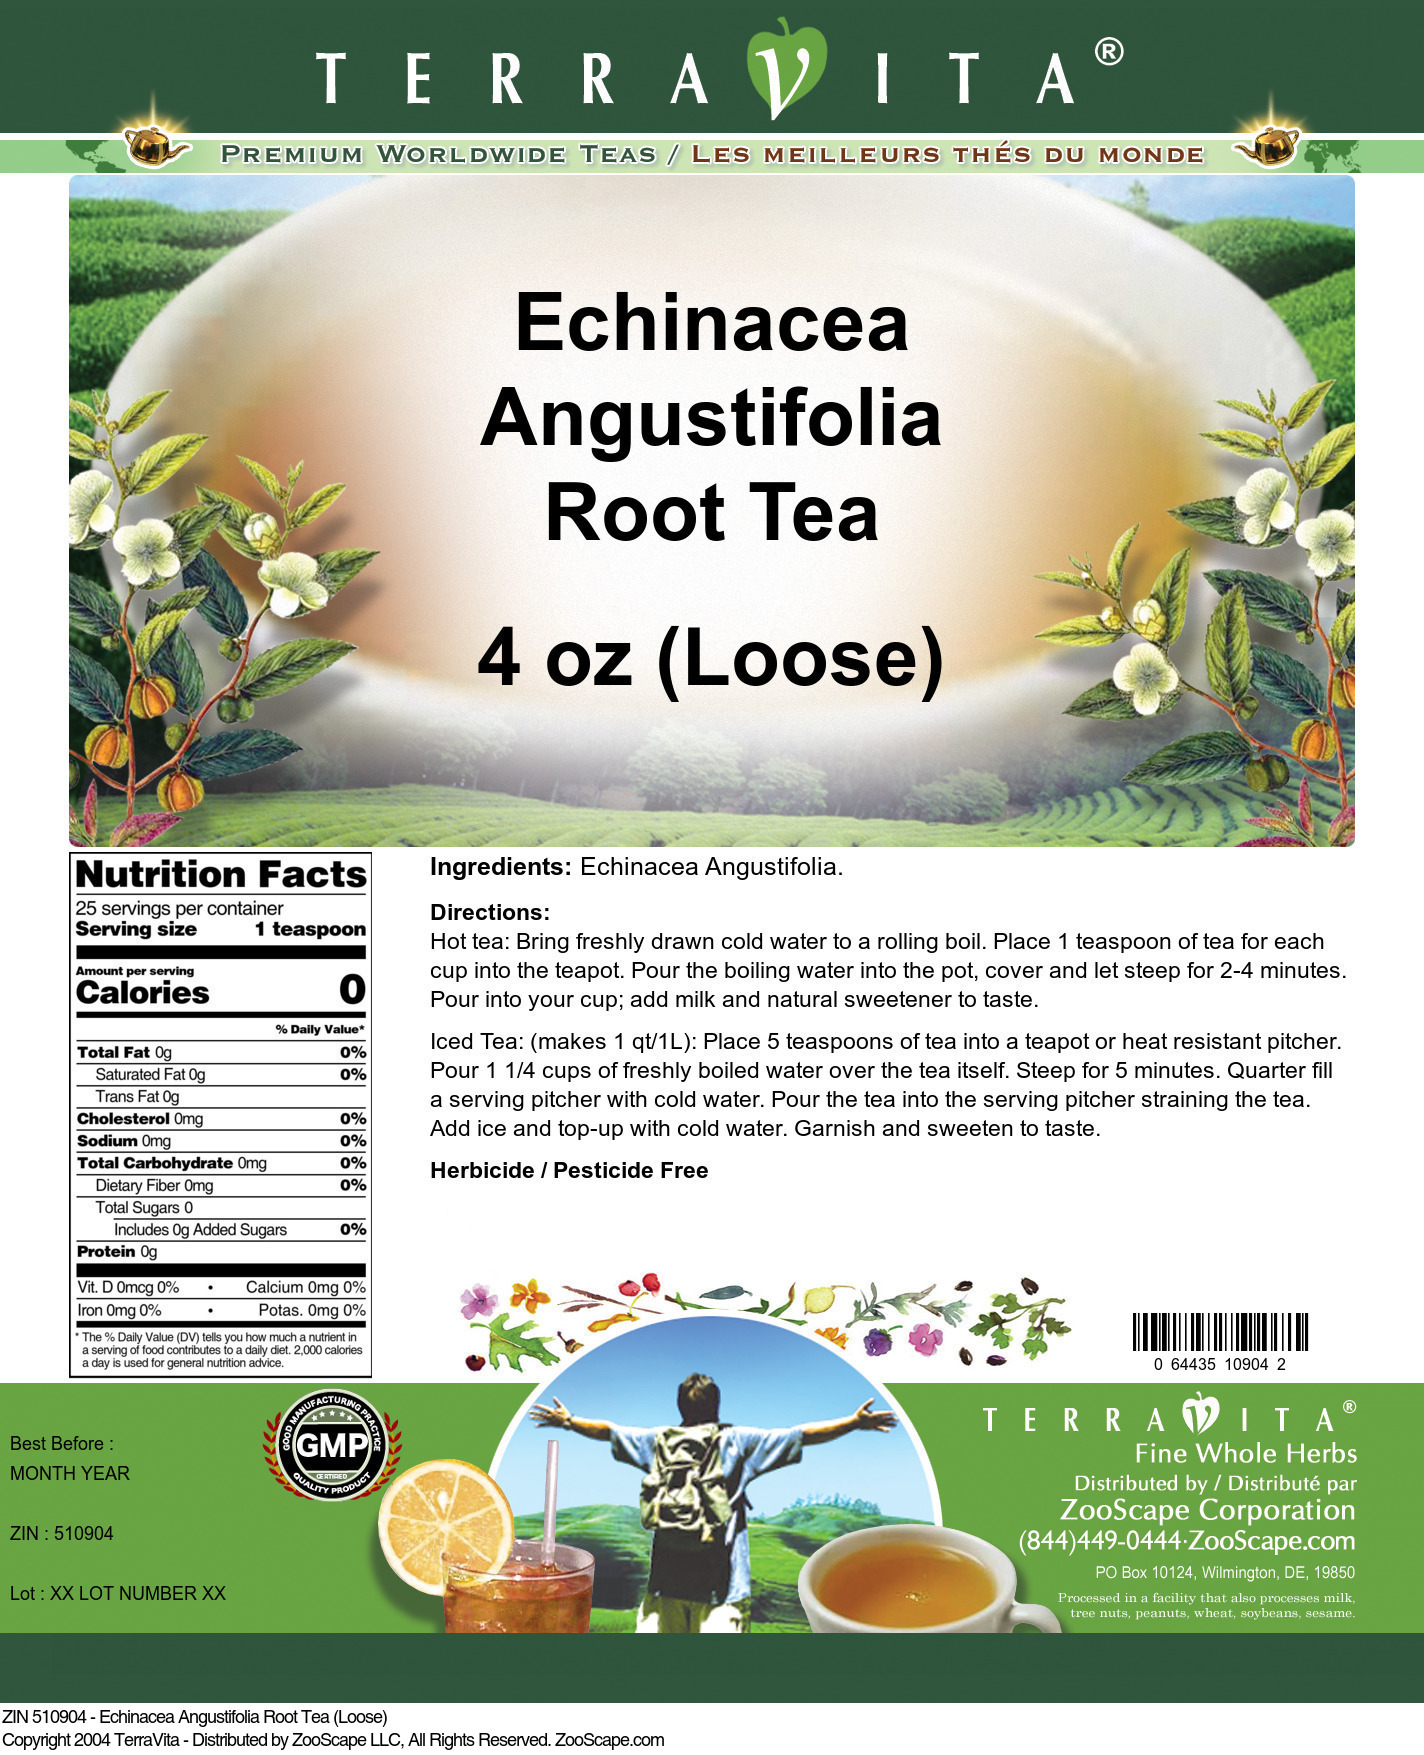 Echinacea Angustifolia Root Tea (Loose) - Label